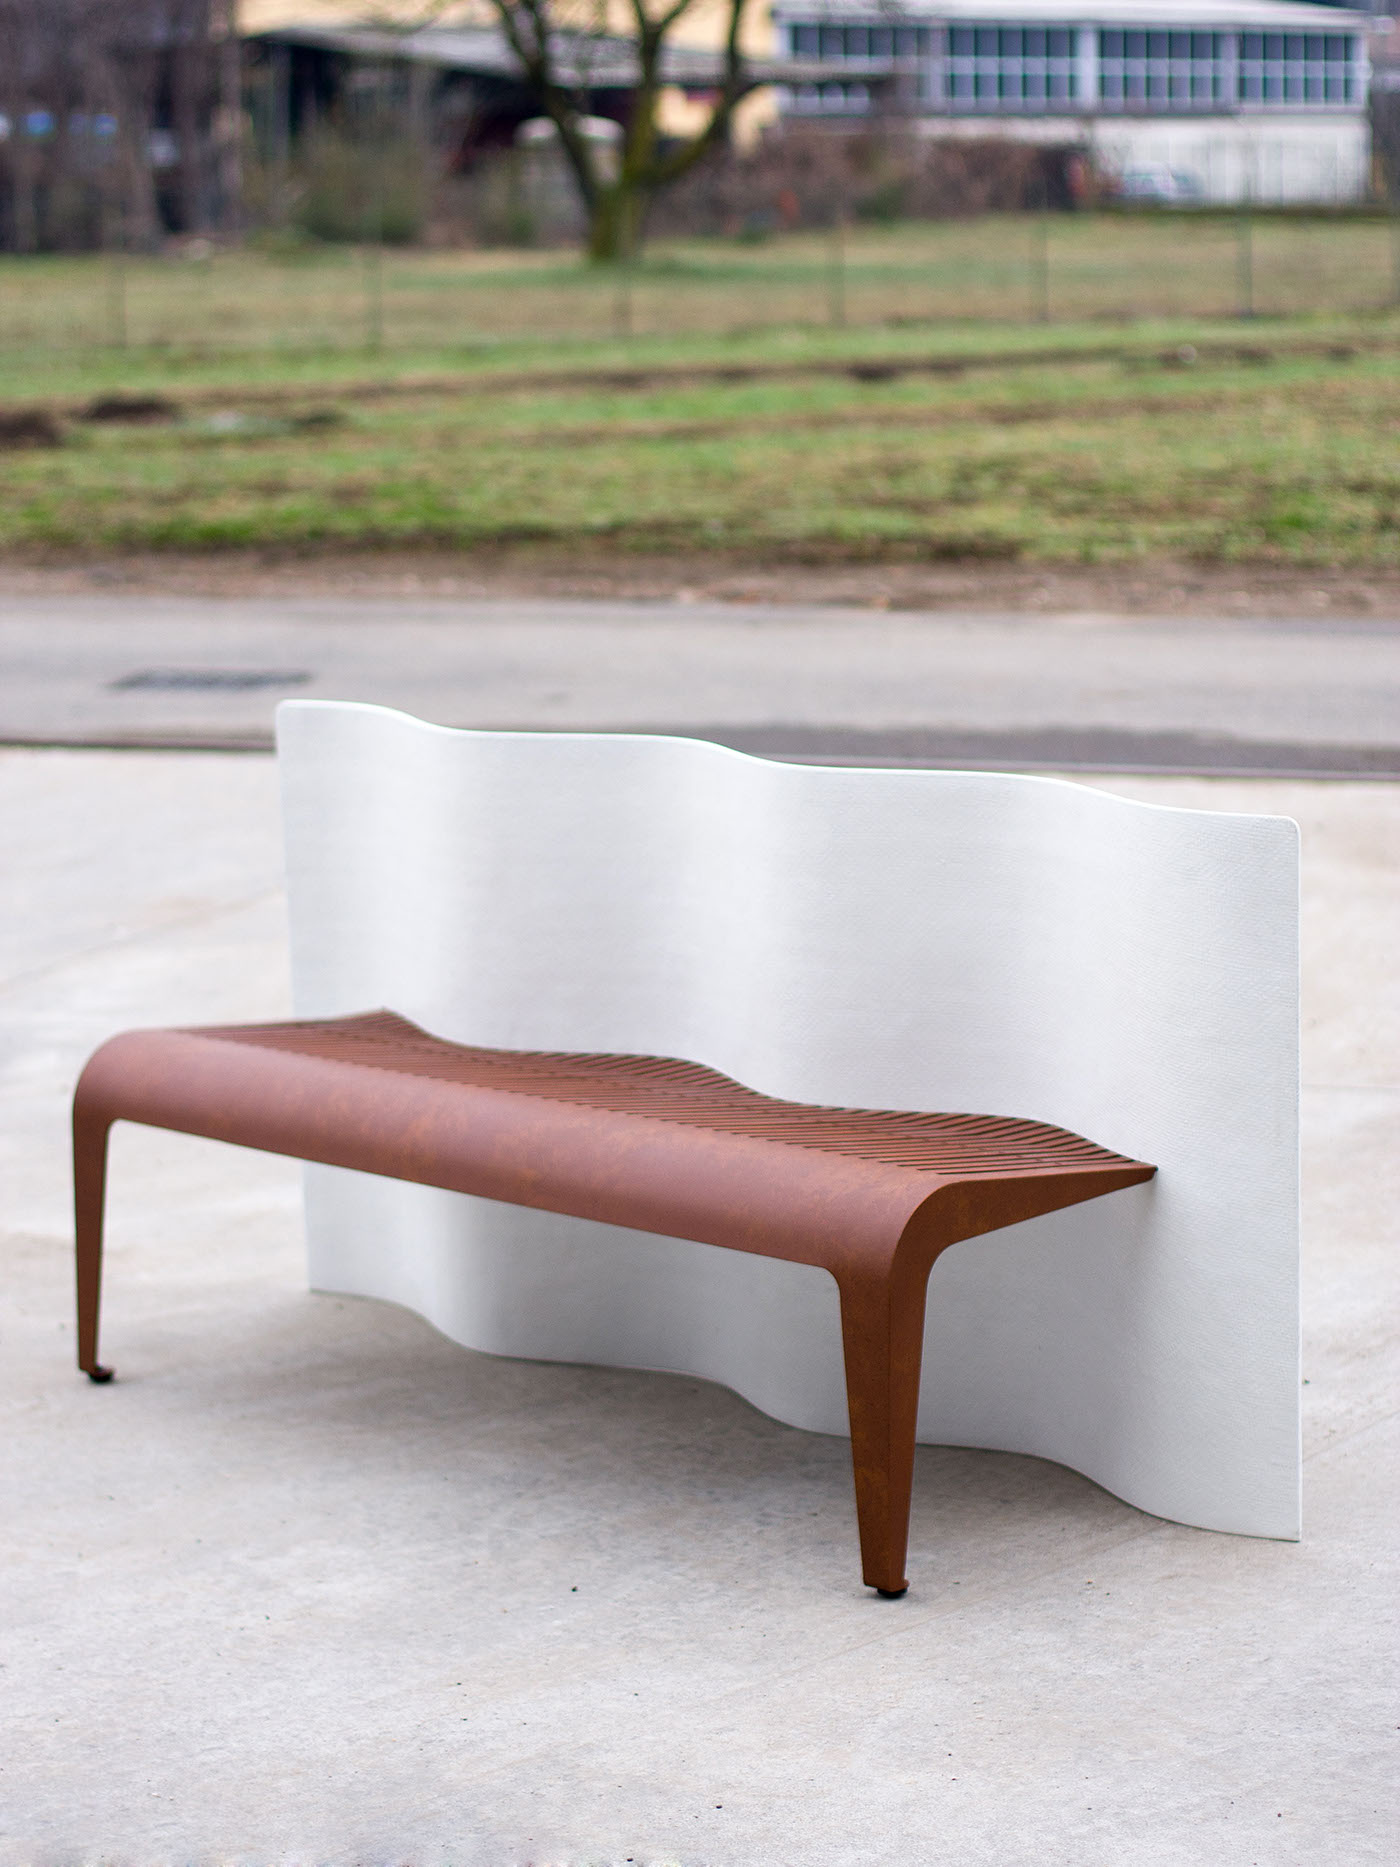 manrico freda Eudossia Bench Design Outdoor product industrial chair bench Corten